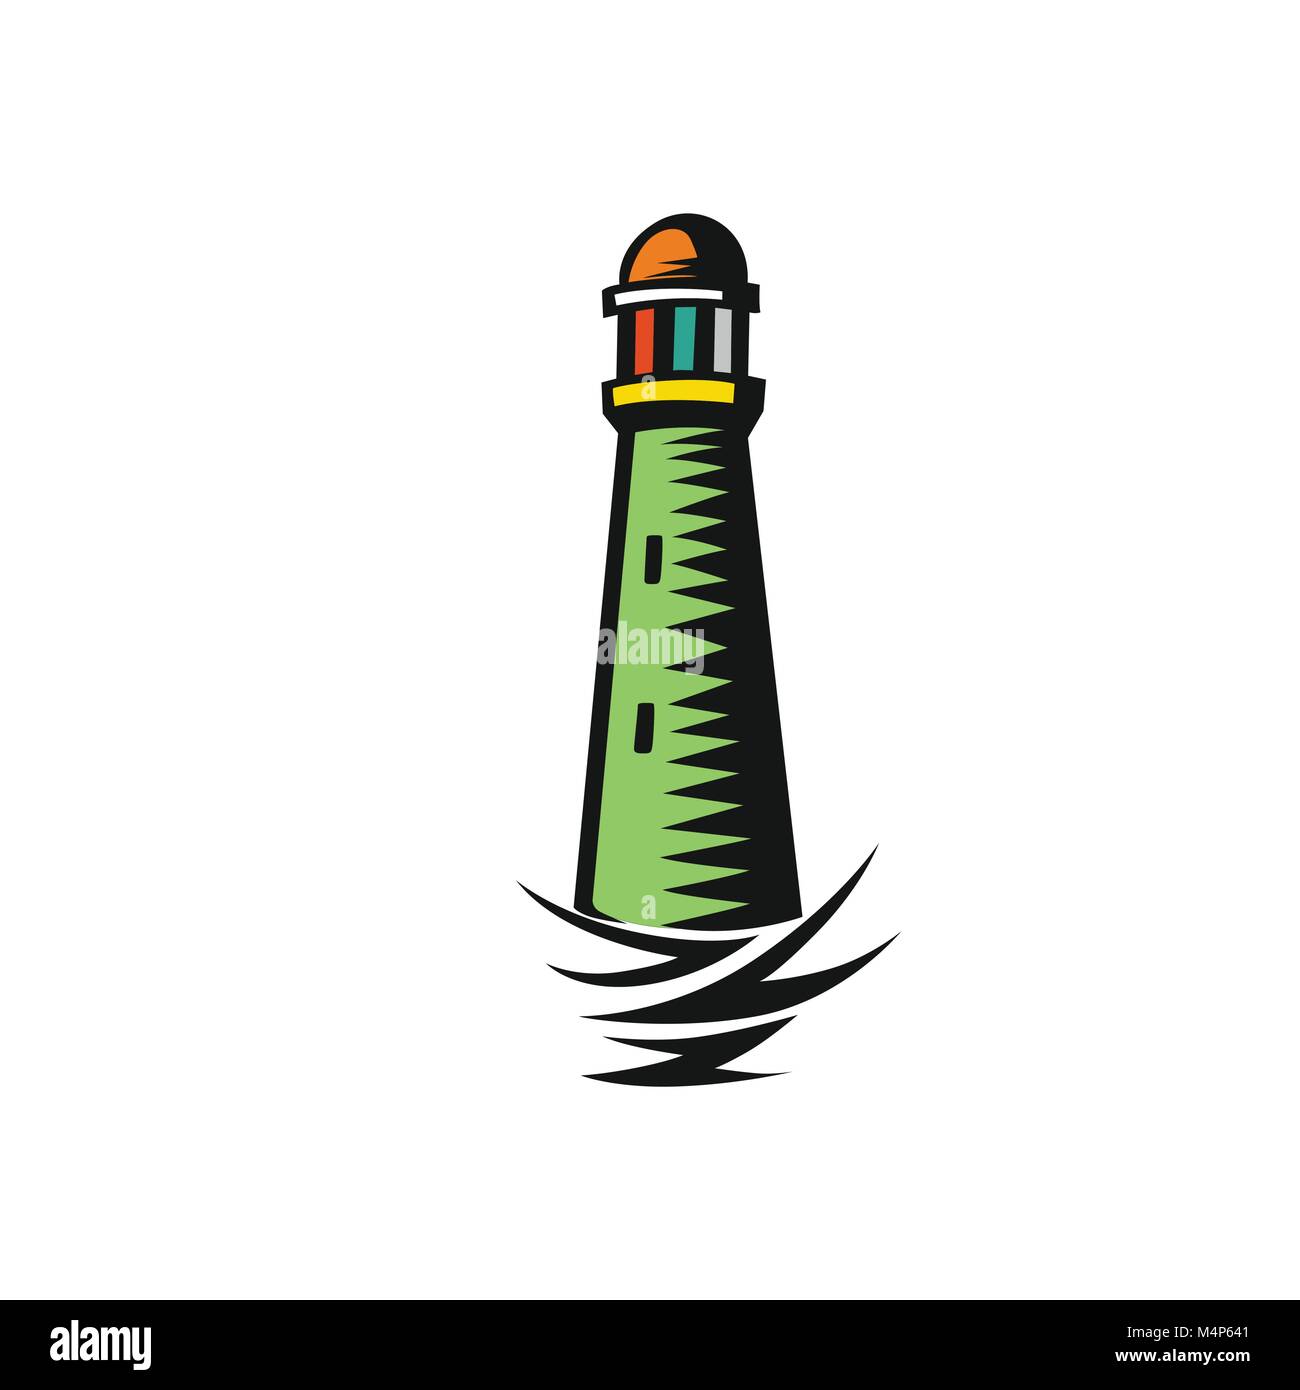 minimal logo of green light house vector illustration. Stock Vector